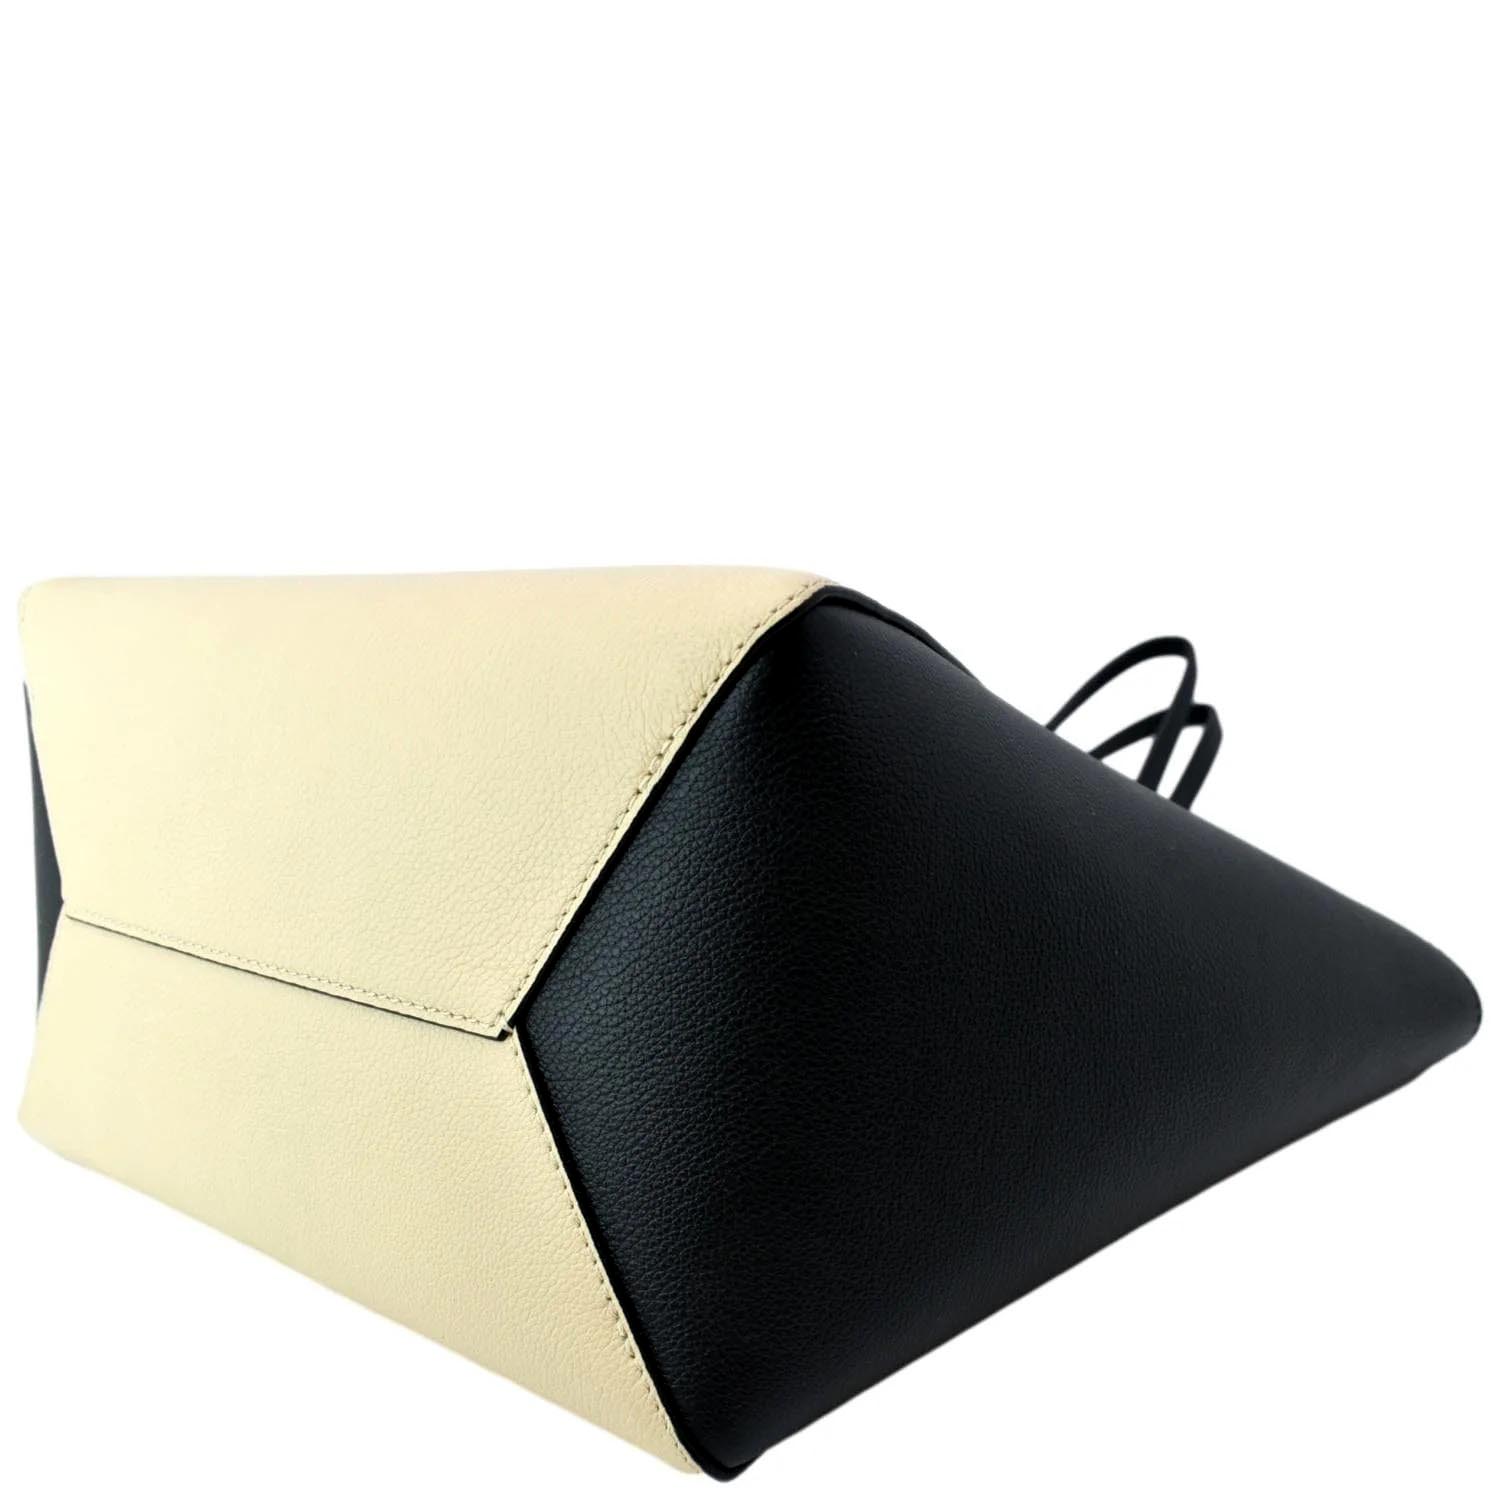 Lockme Cabas Tote – Keeks Designer Handbags